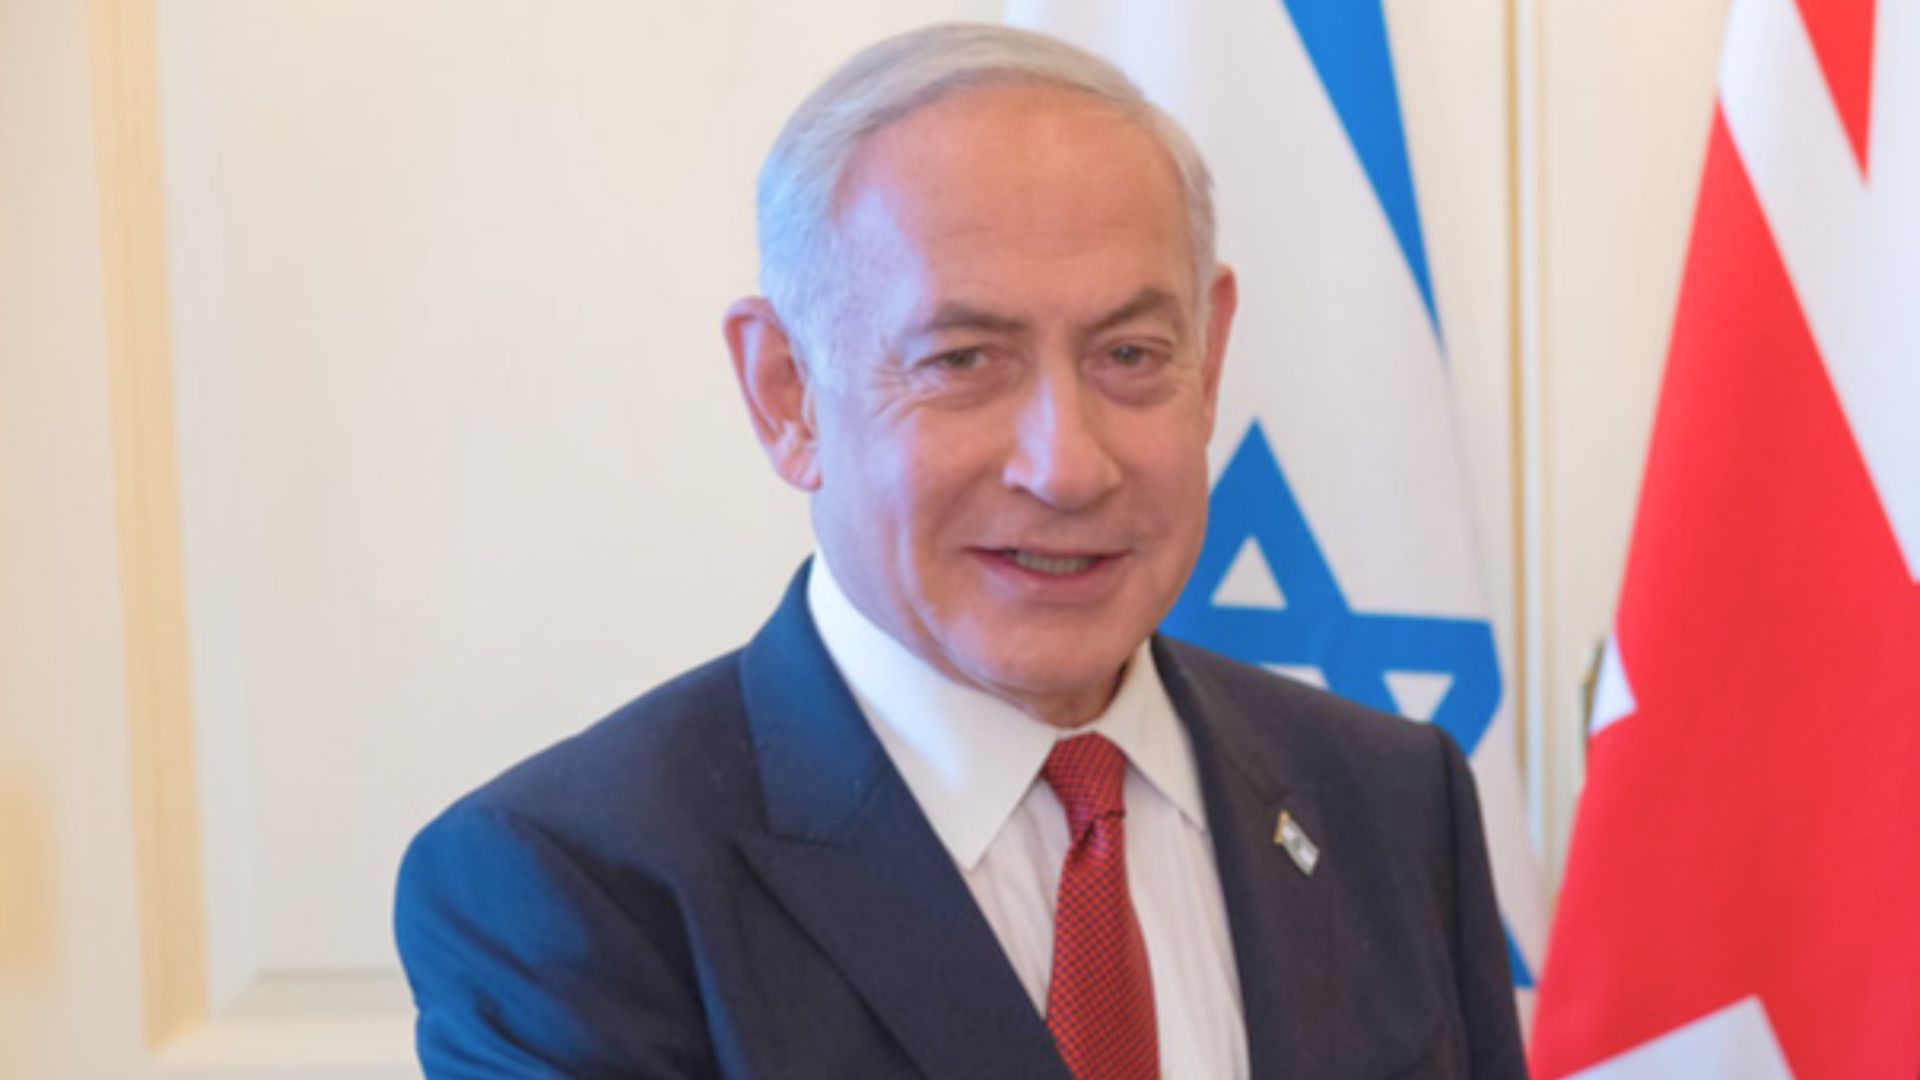 Benjamin Netanyahu - Primeiro-ministro de Israel